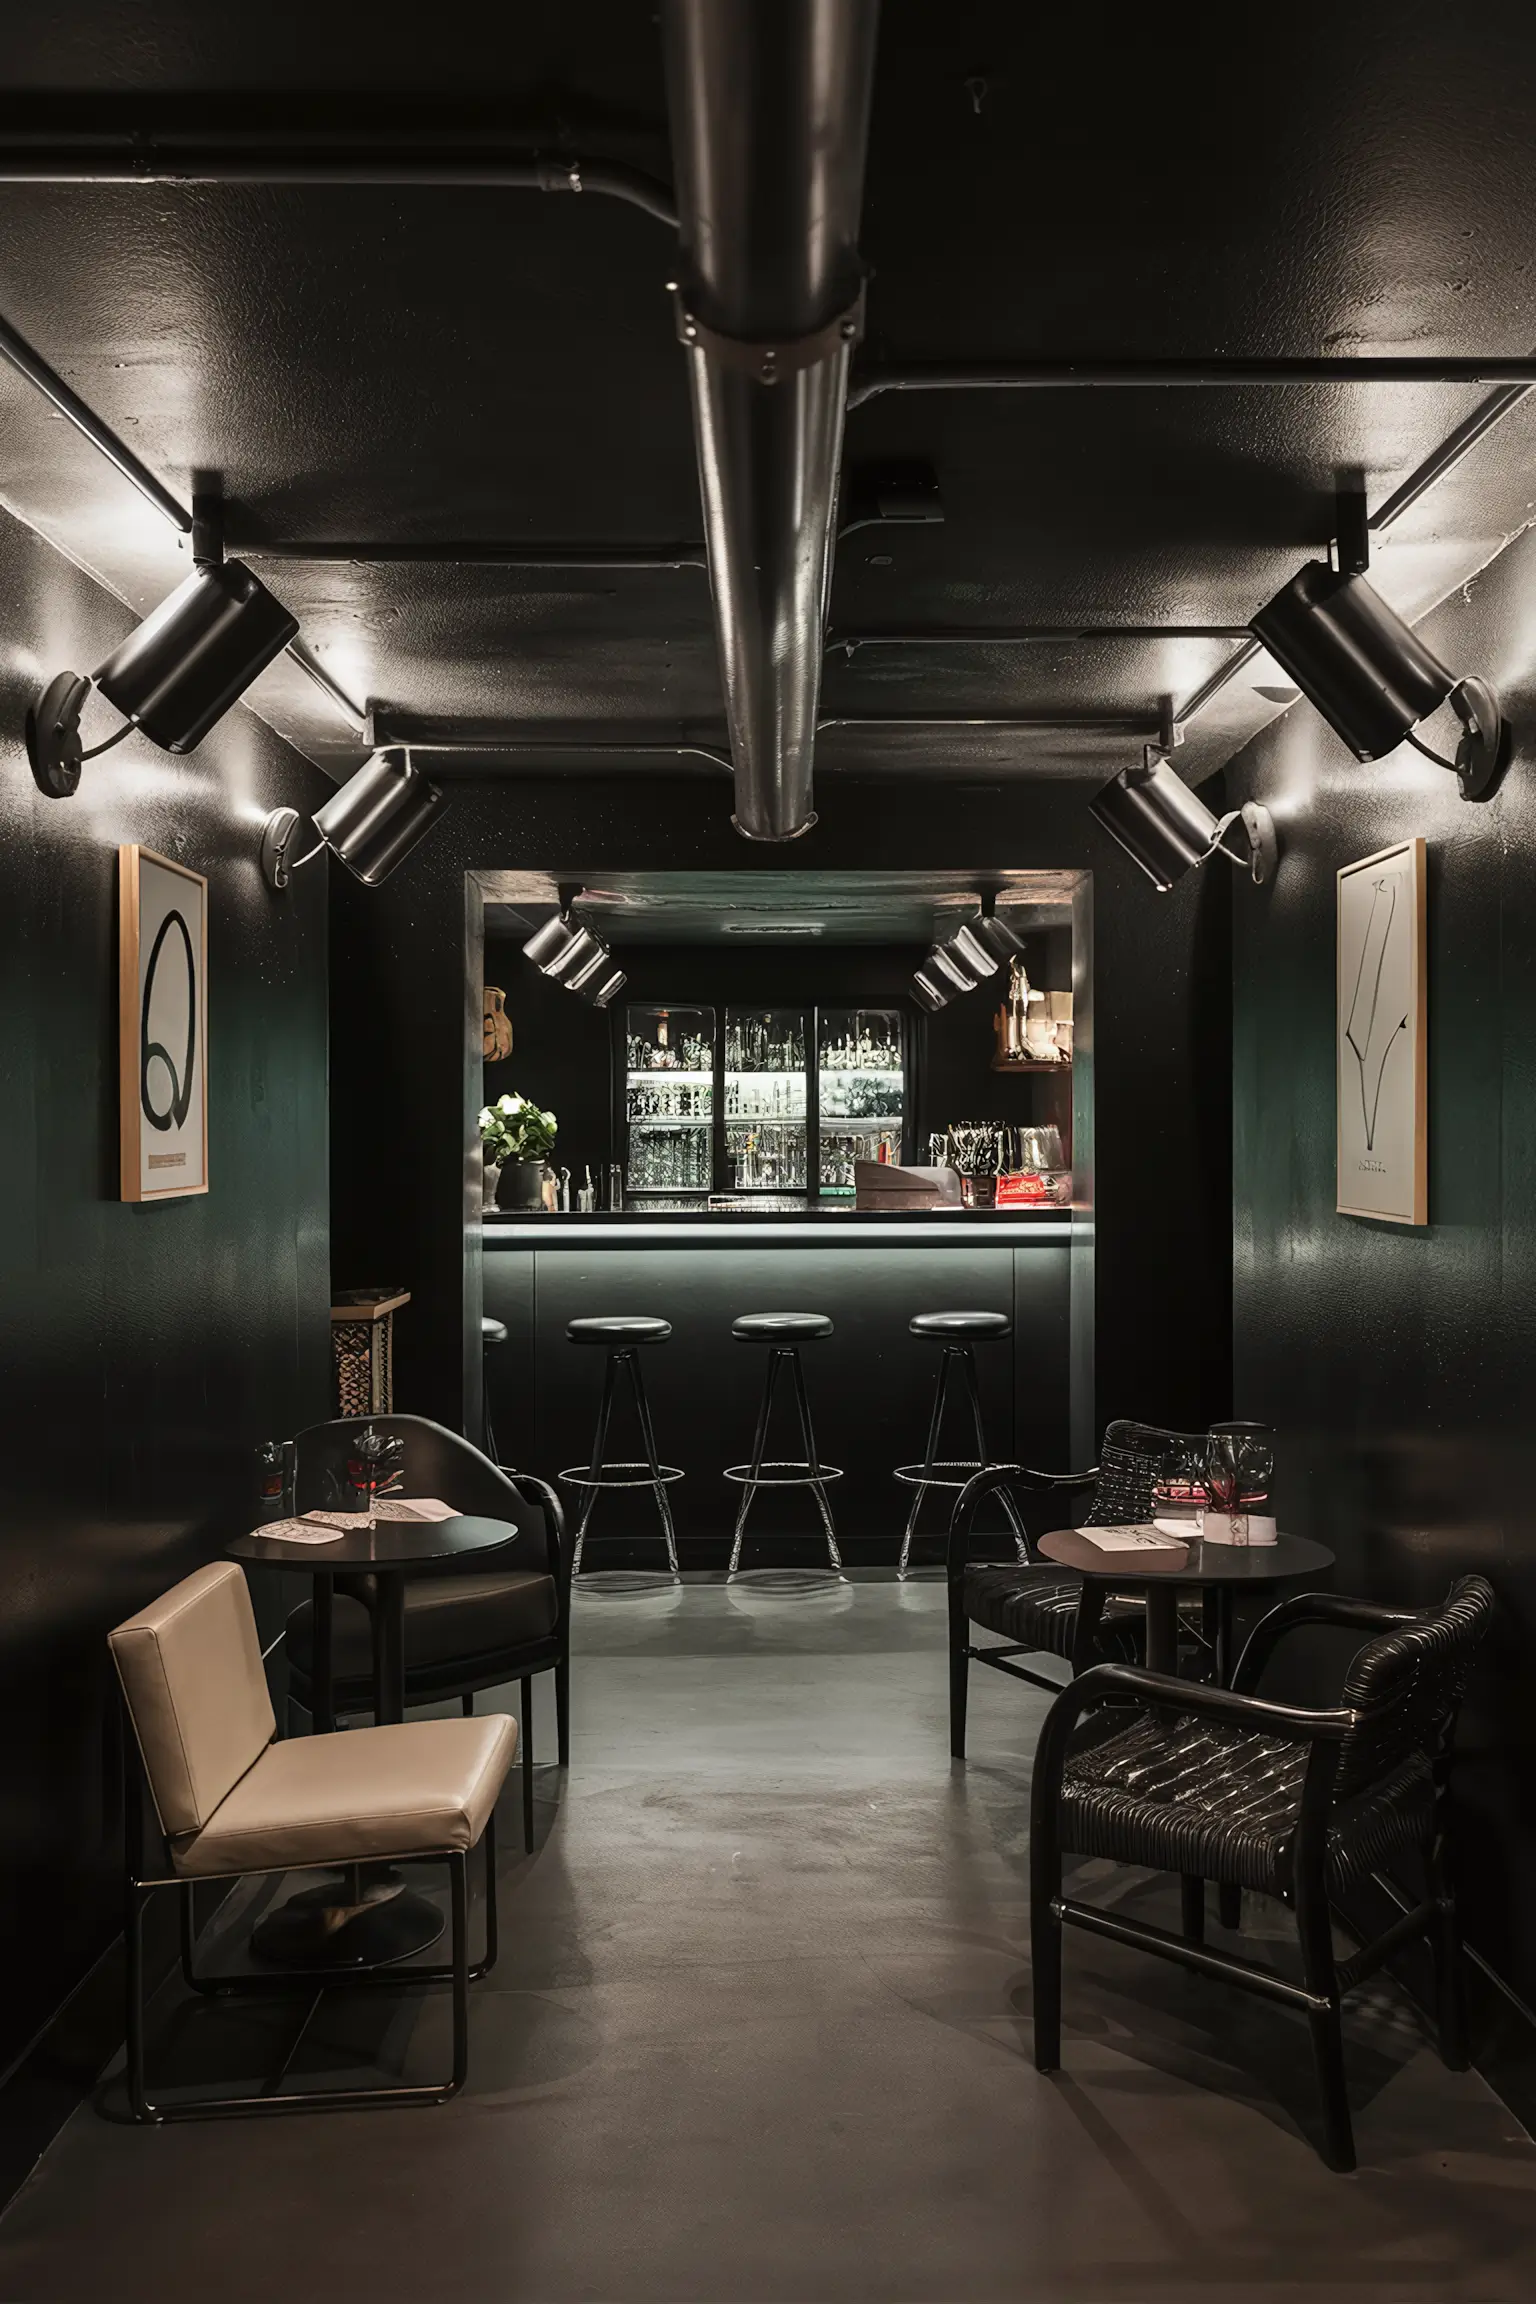 Sleek black basement bar with modern lighting and chic decor.